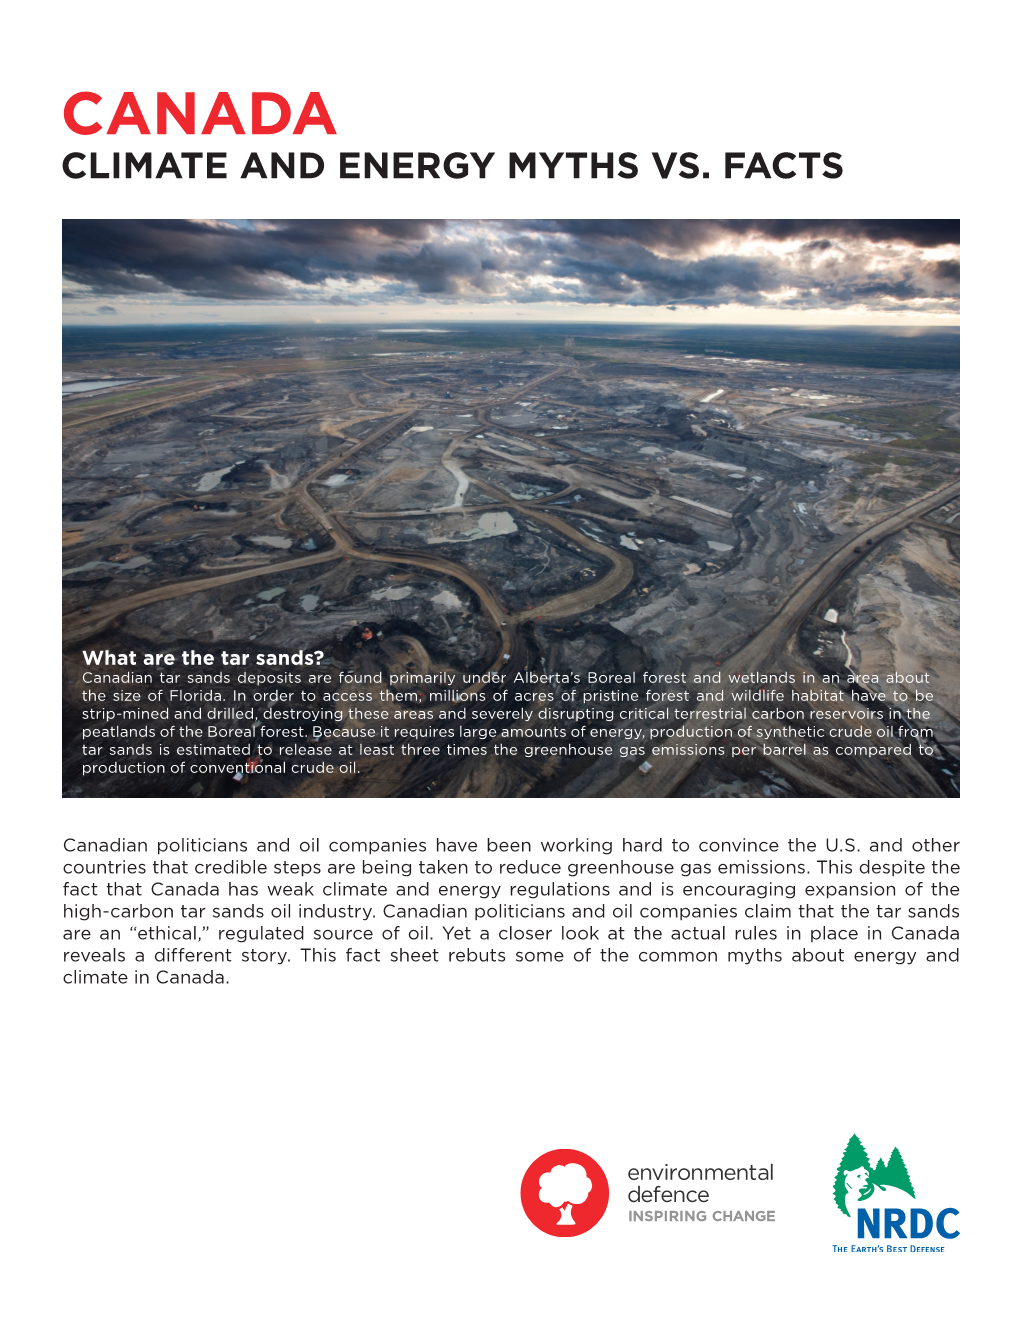 NRDC and Environmental Defence Canada Fact Sheet: Canada